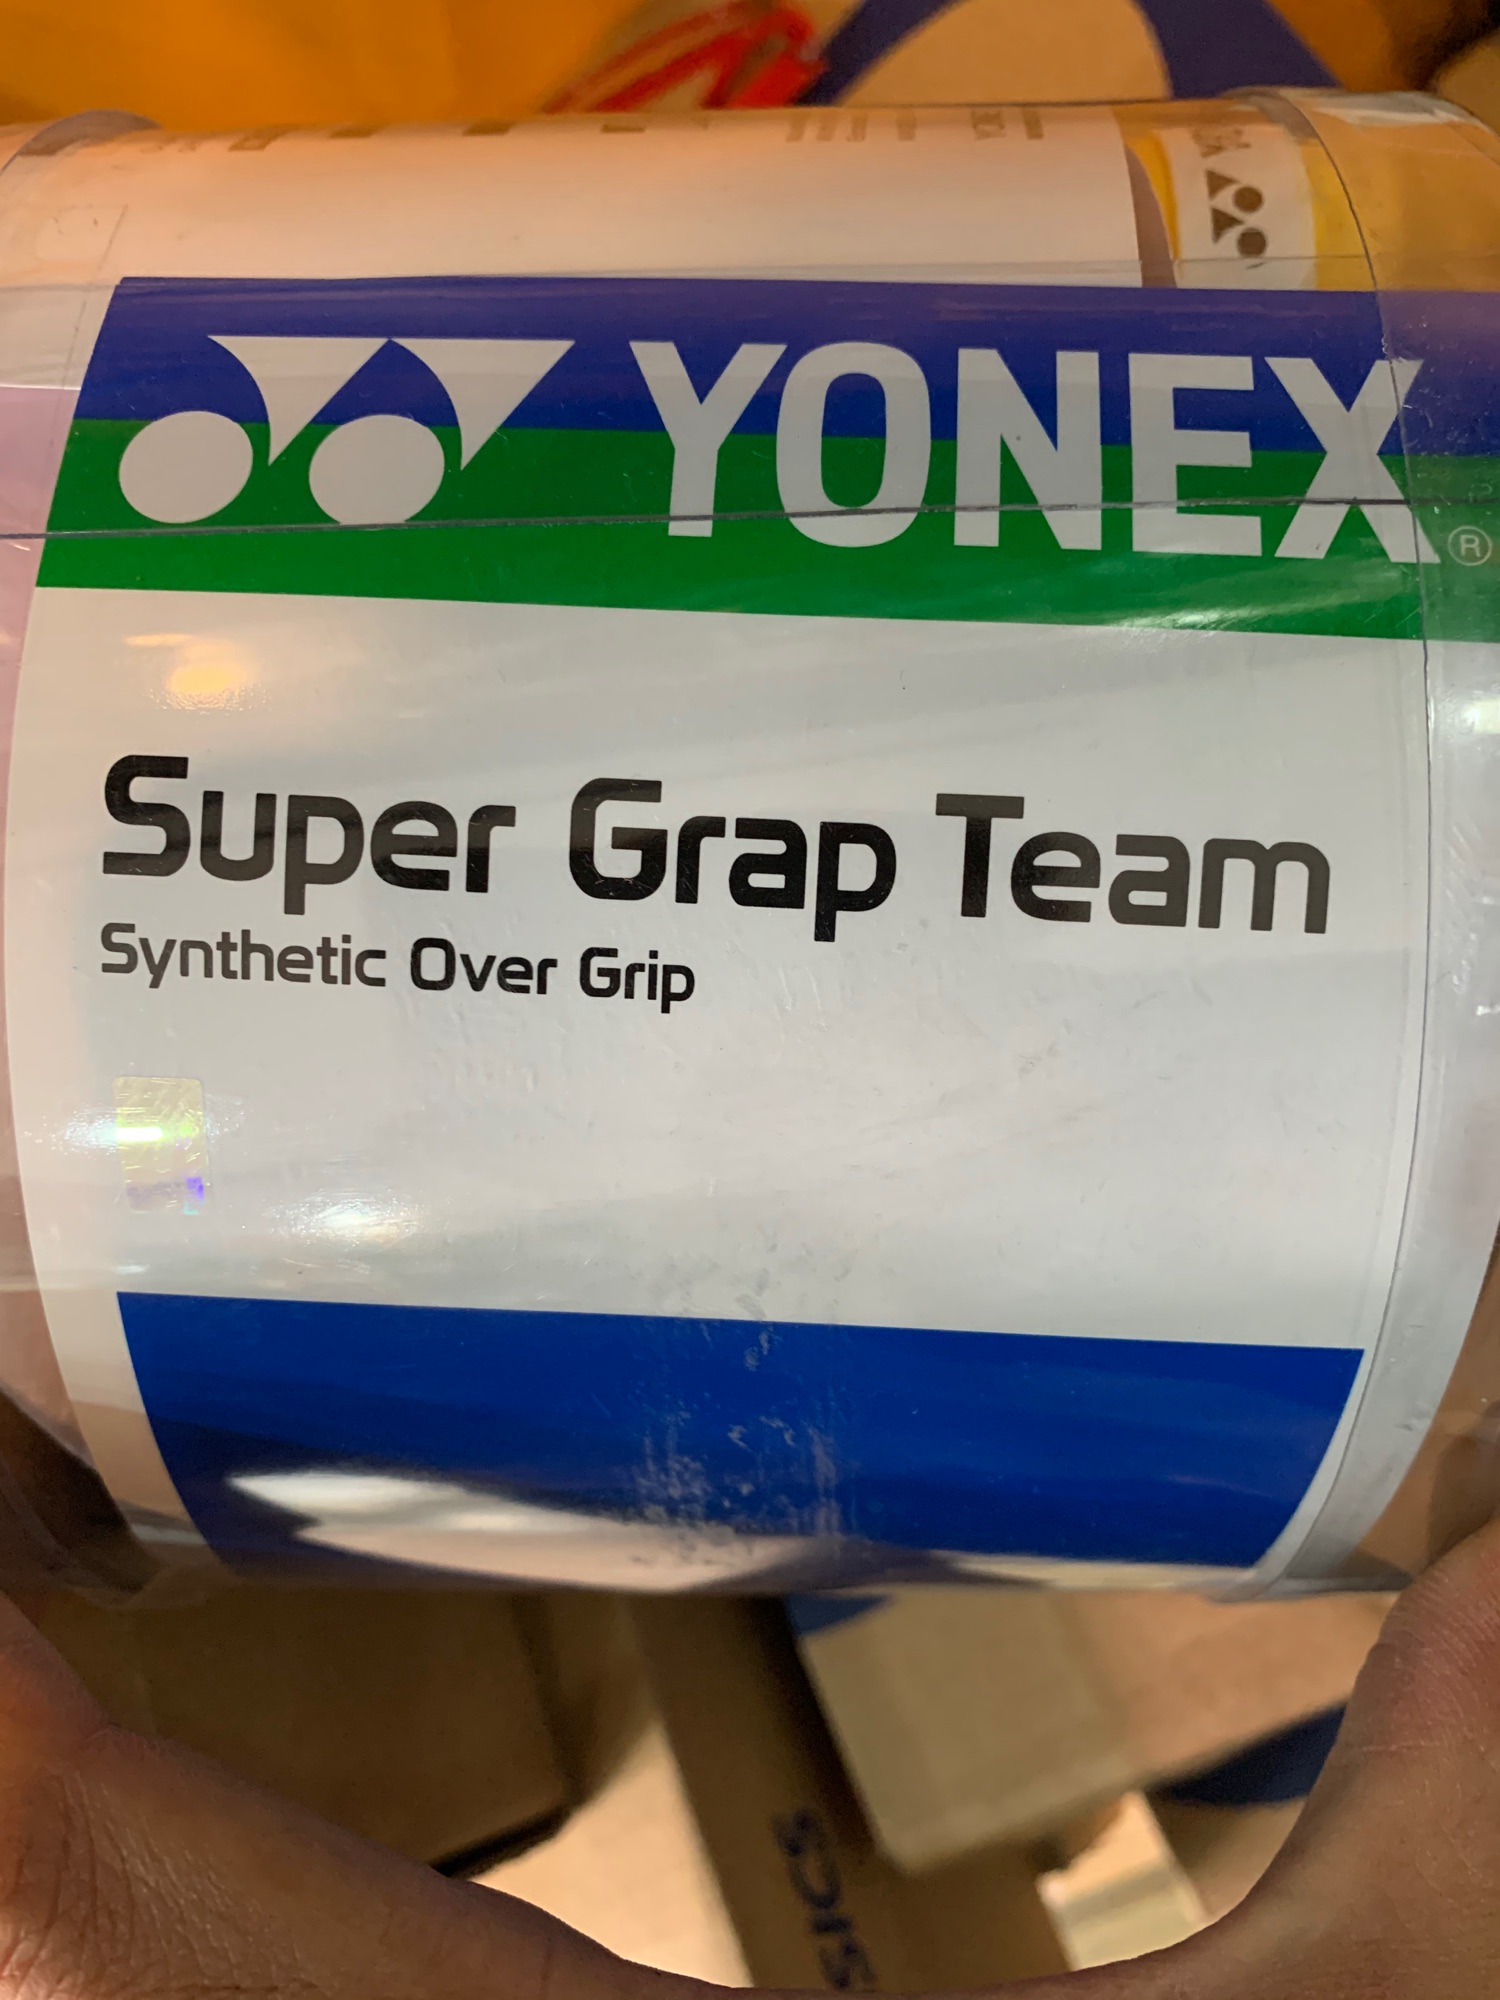 Yonex super Grap Team (synthetic over grip)